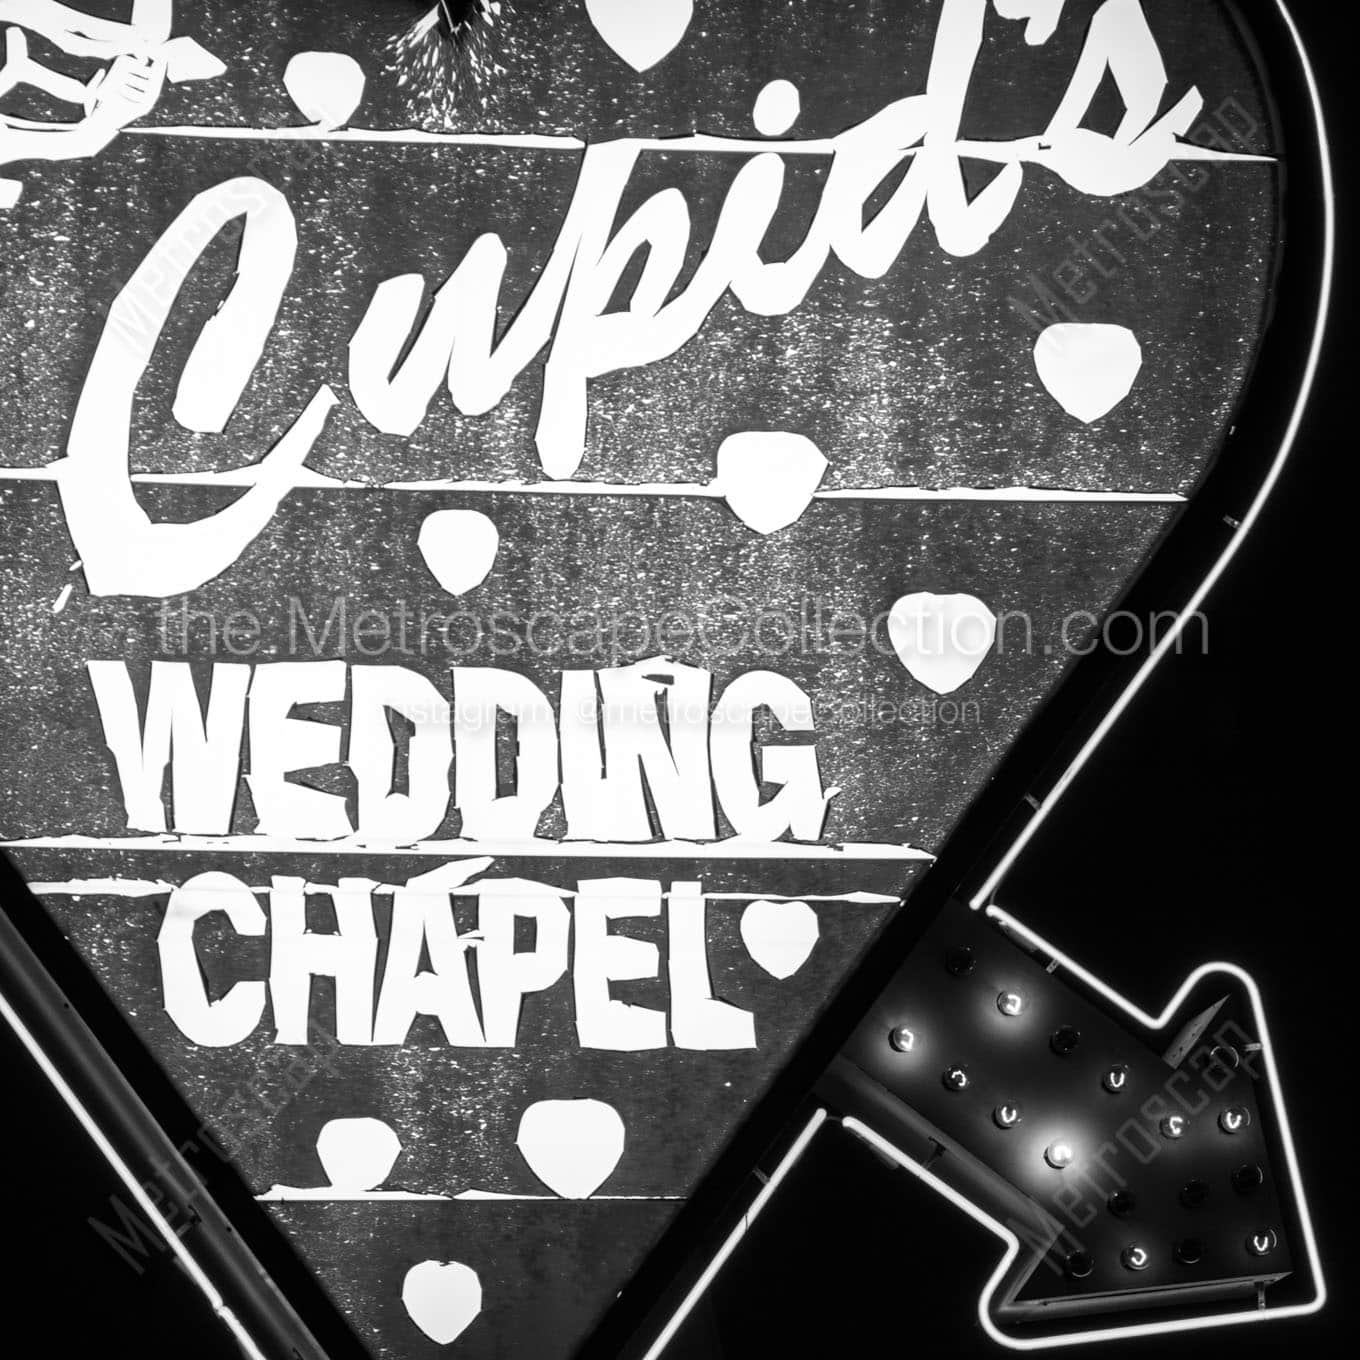 cupids wedding chapel Black & White Office Art